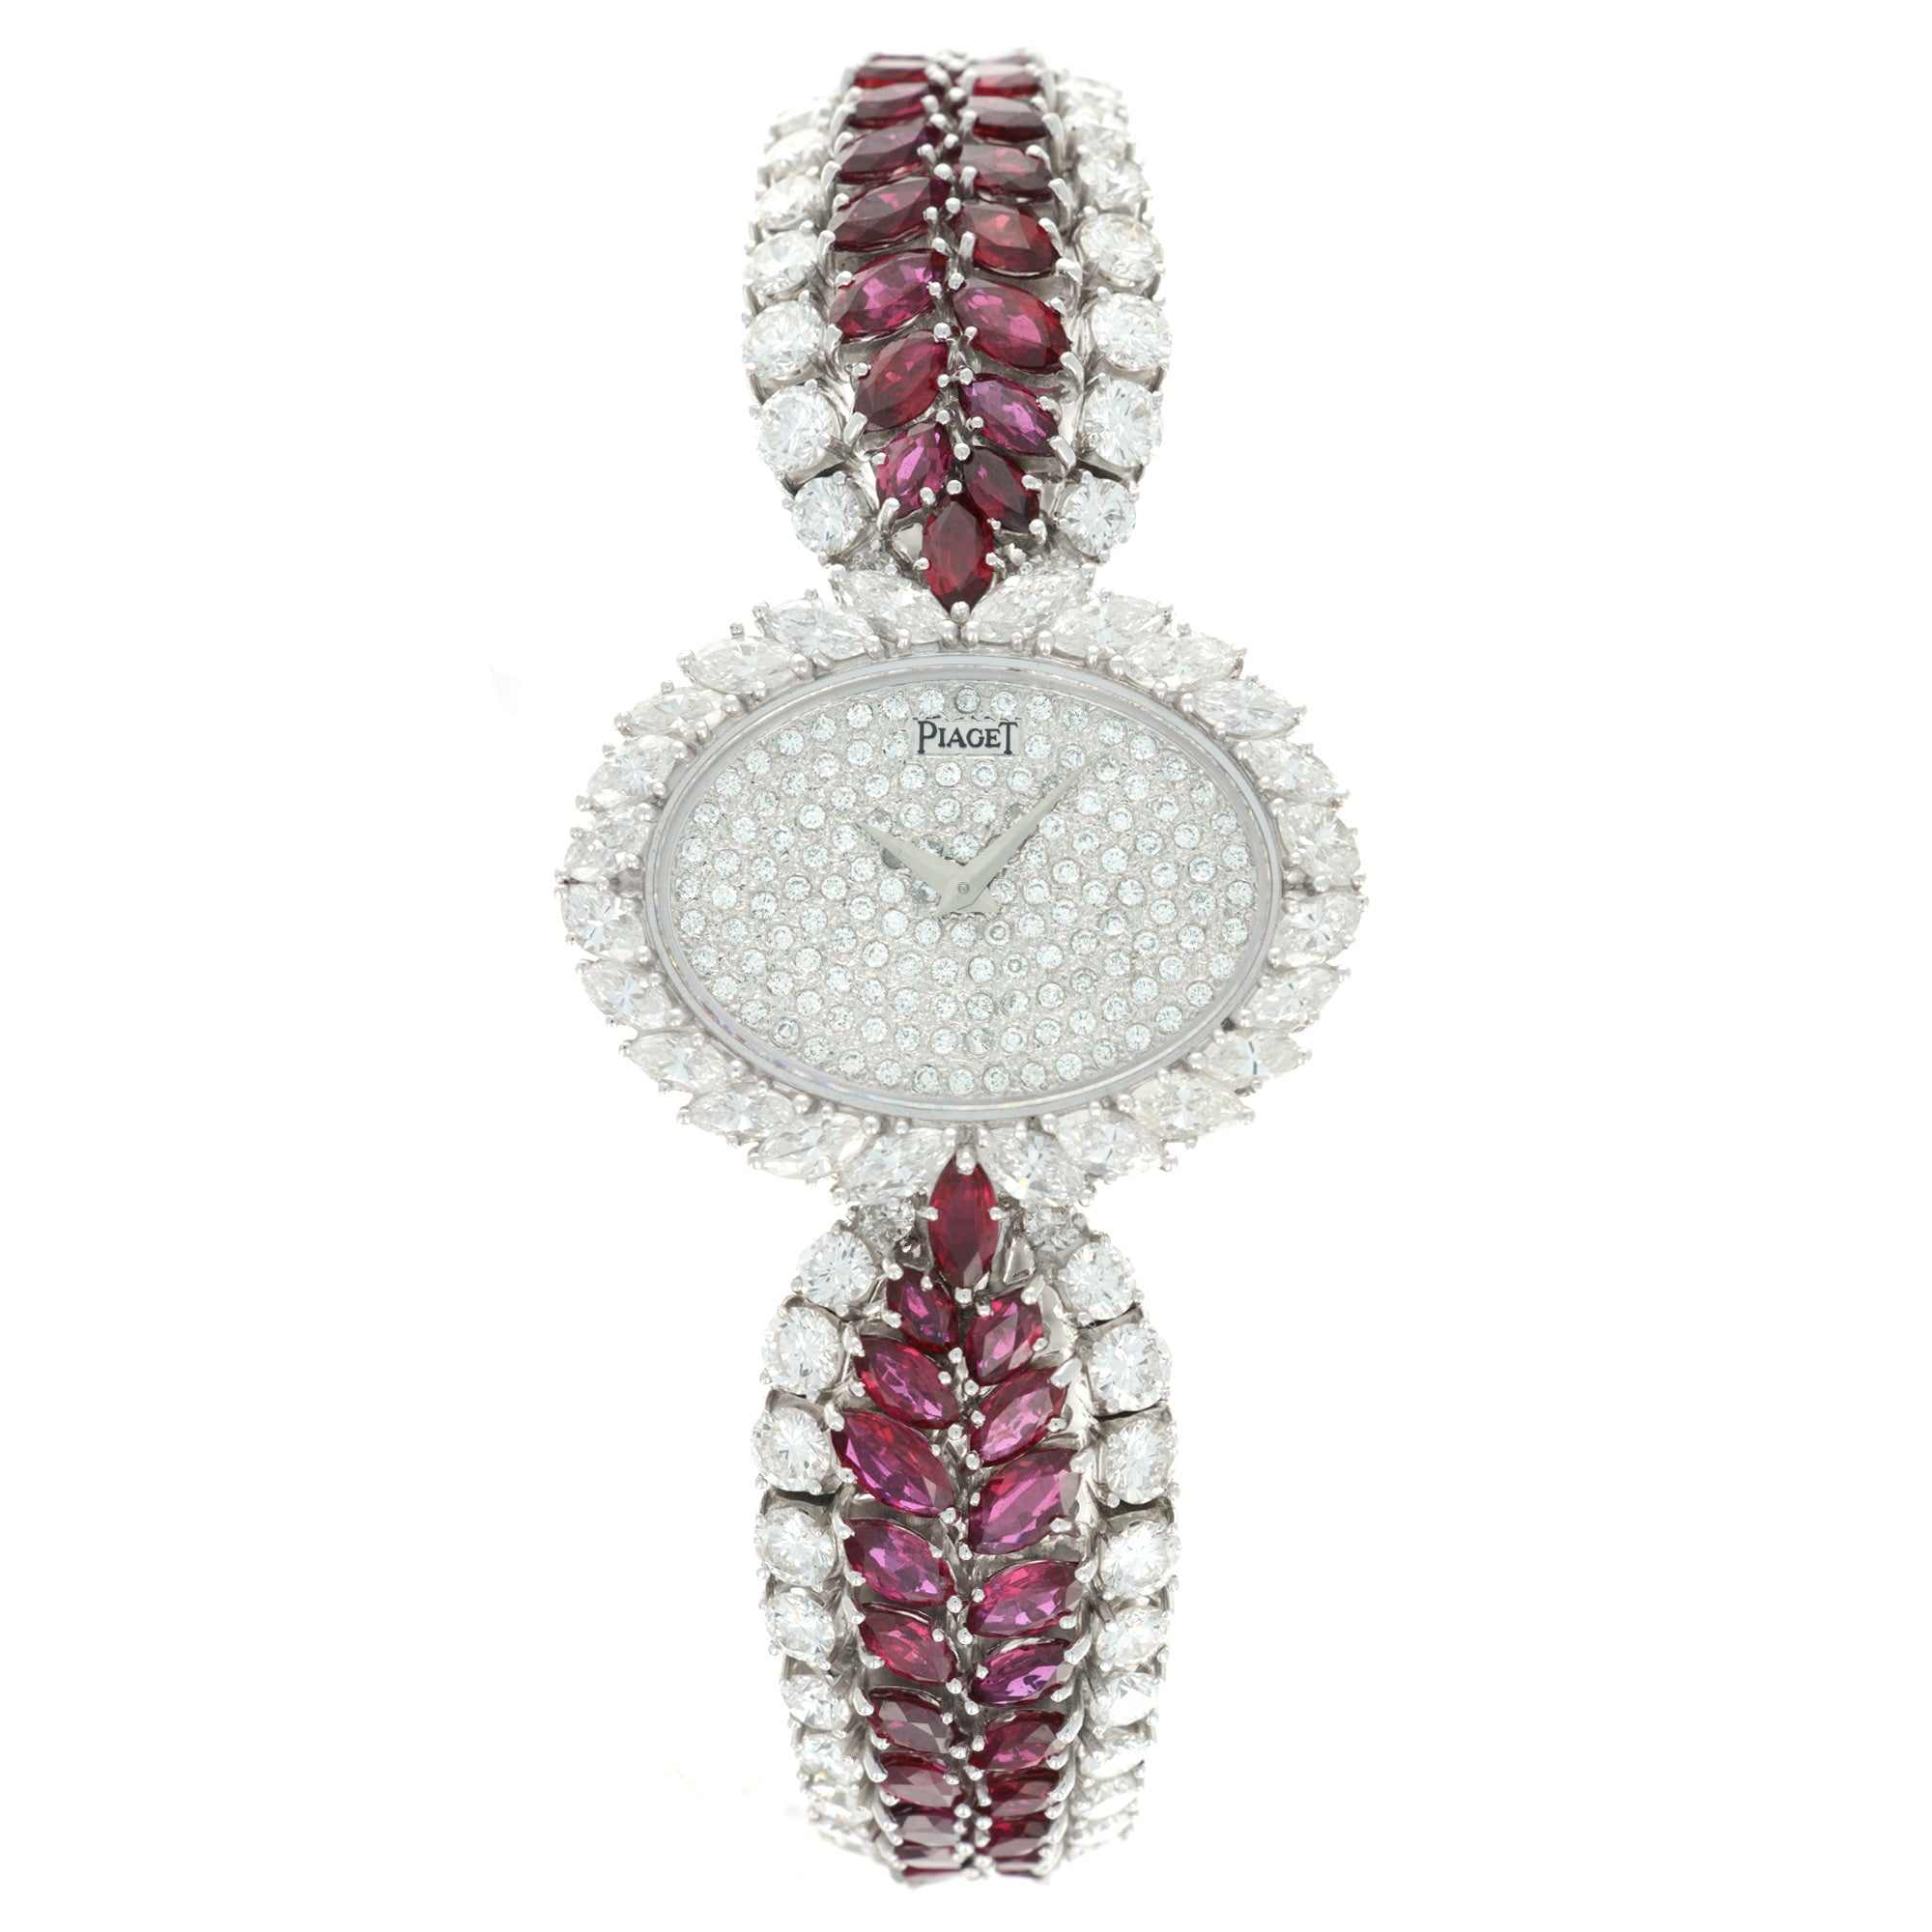 Piaget - Piaget White Gold Diamond & Ruby Bracelet Watch - The Keystone Watches